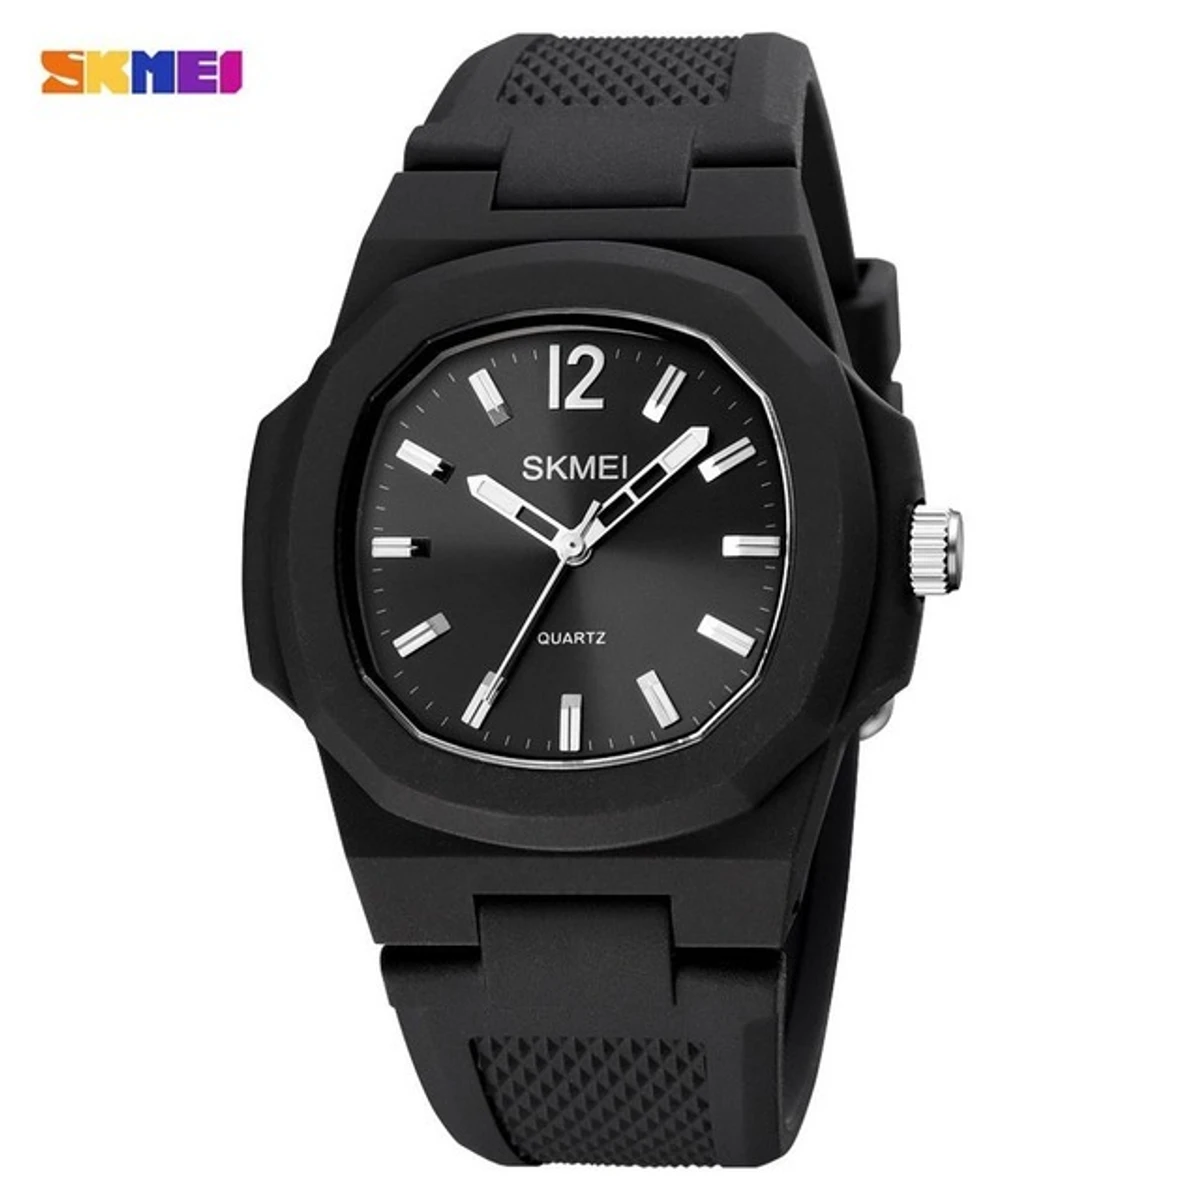 SKMEI Model 1717 Original Watch Retro Silicone Band Casual Analog Quartz Wristwatch 1717 Cool Watches Fashion Waterproof Sport Watch